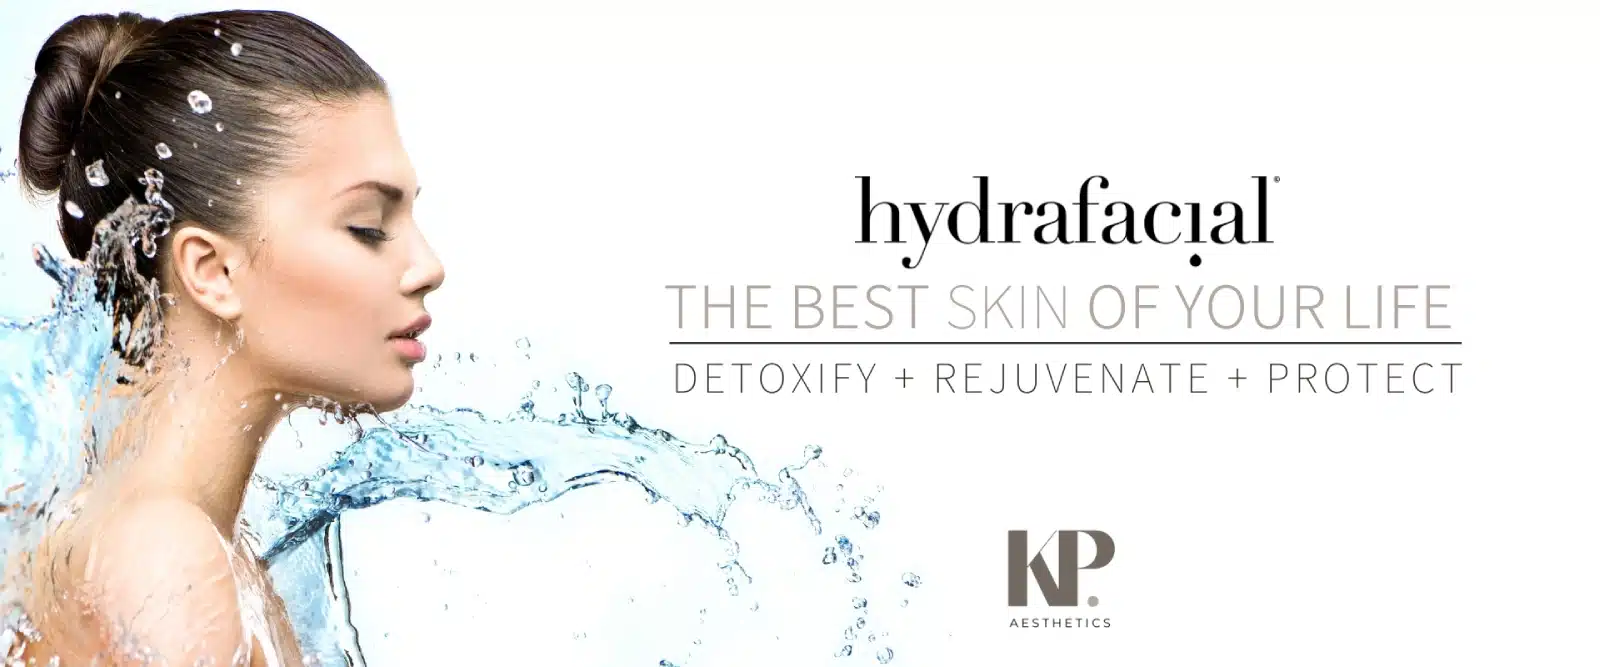 Hydrafacial - The Best Skin of Your Life - Daetoxify + Rejuvenate + Protect - KP Aesthetics